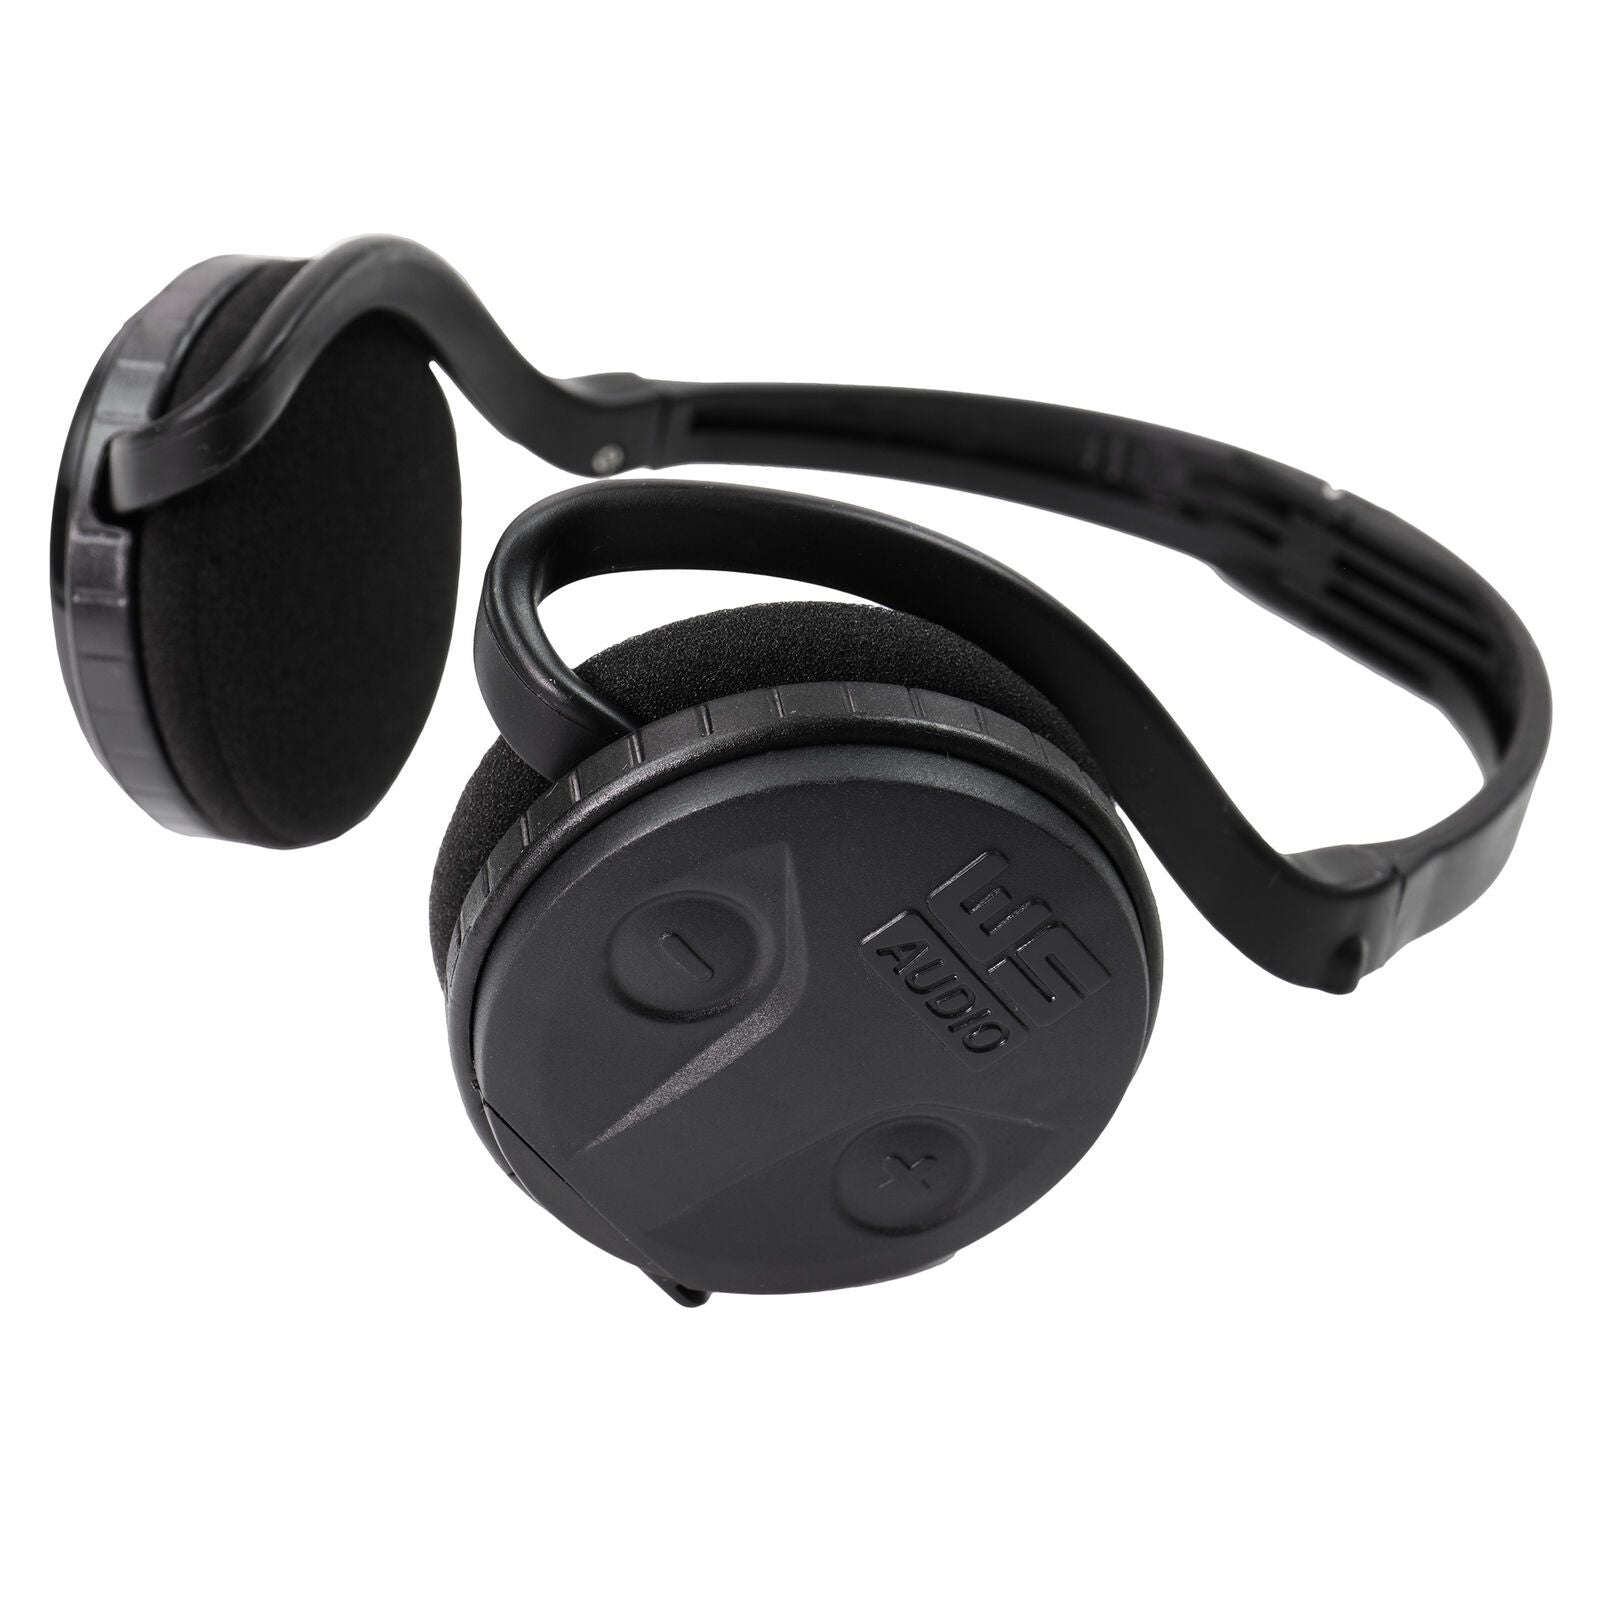 XP ORX Metal Detector Elliptical 9.5” HF Coil + WS Audio Wireless Headphones-Destination Gold Detectors